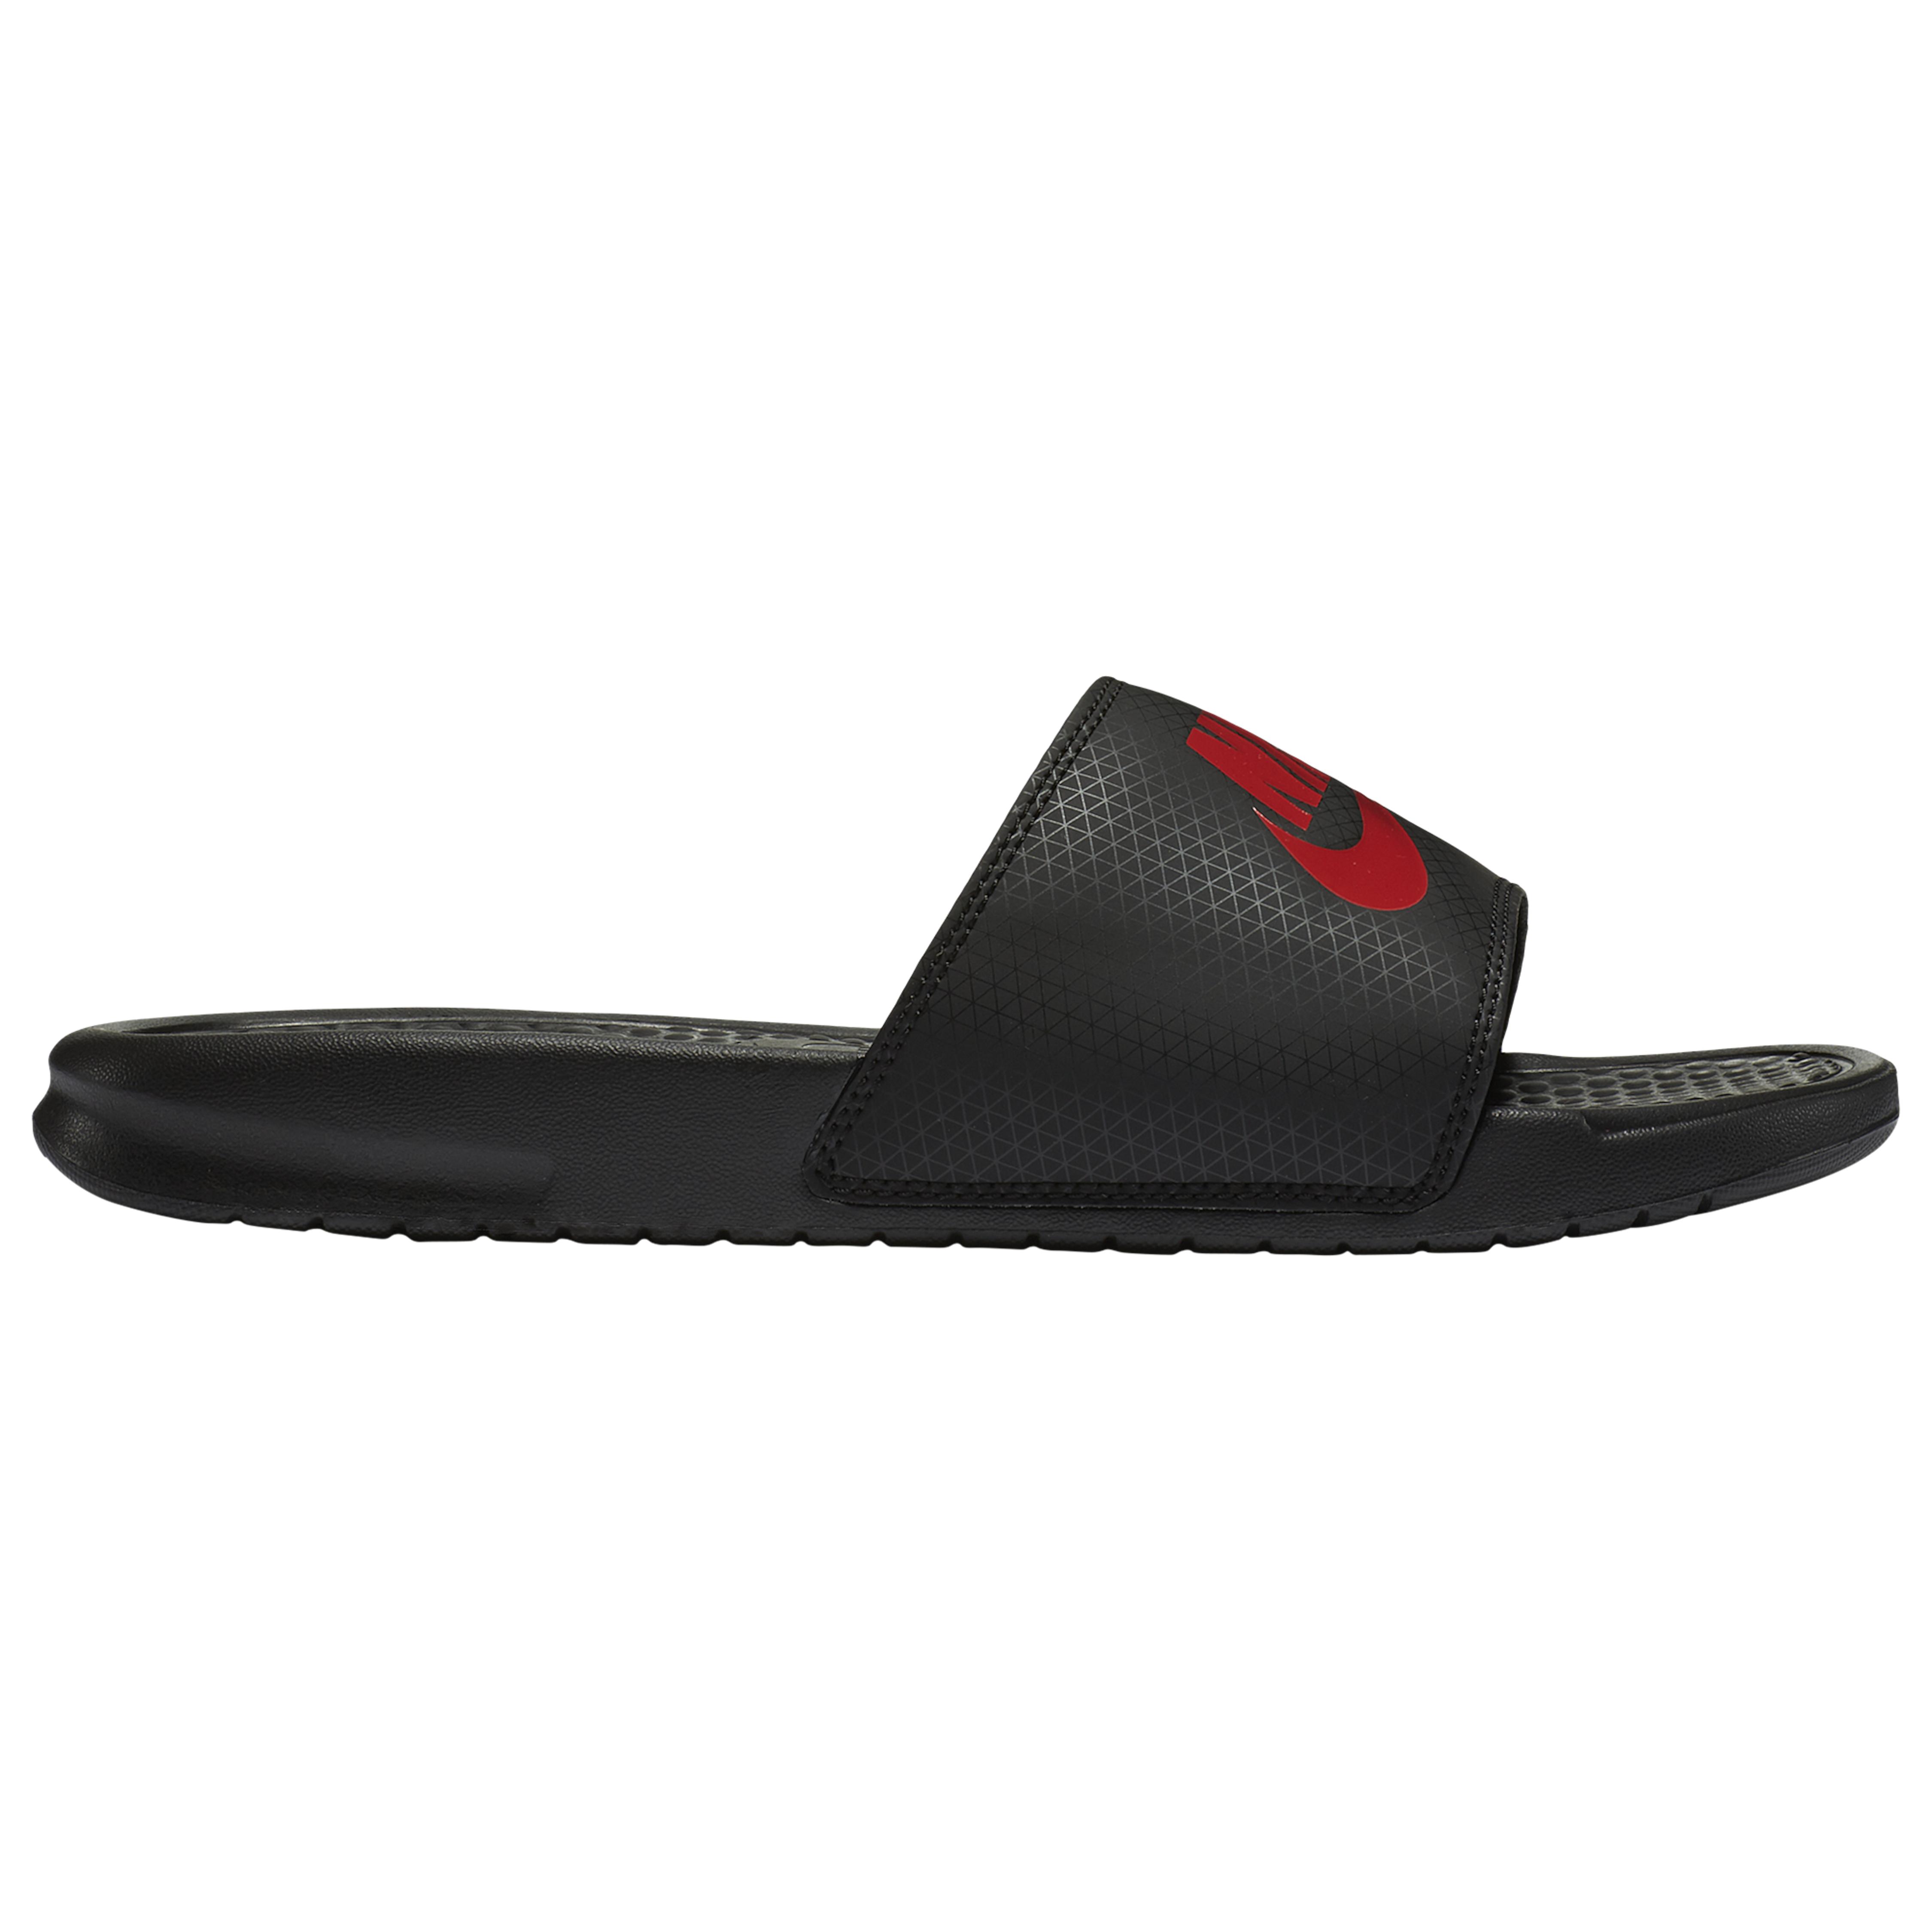 Nike Benassi Jdi Slides in Black,White (Black) for Men - Save 32% | Lyst